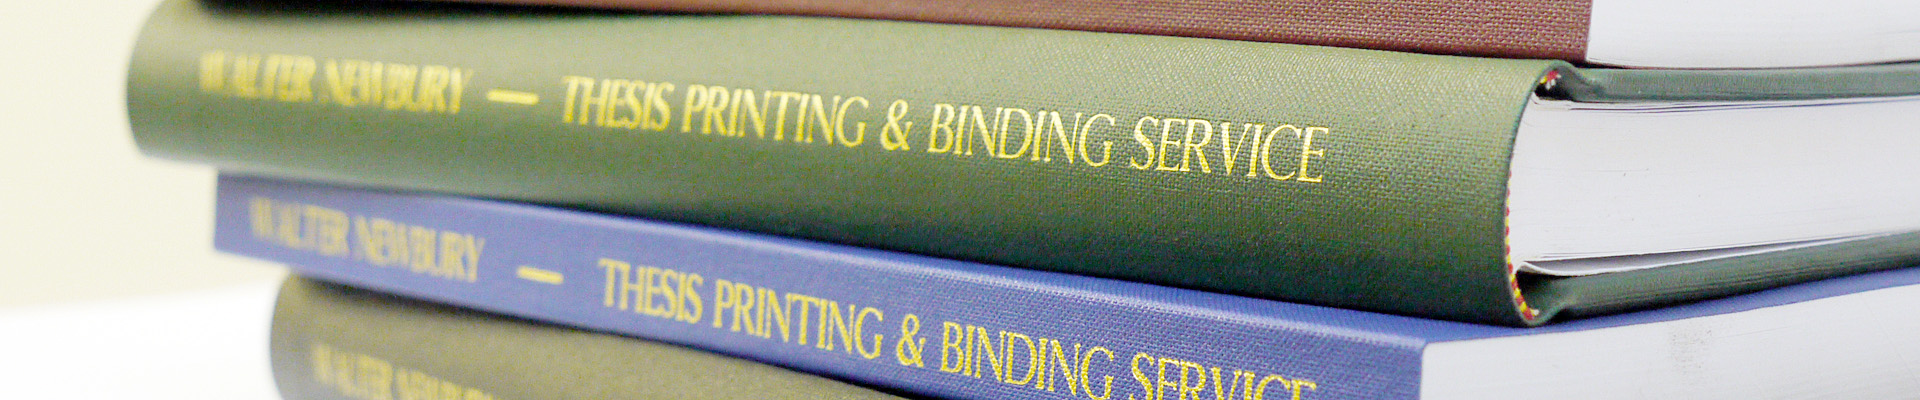 dissertation printing and binding london